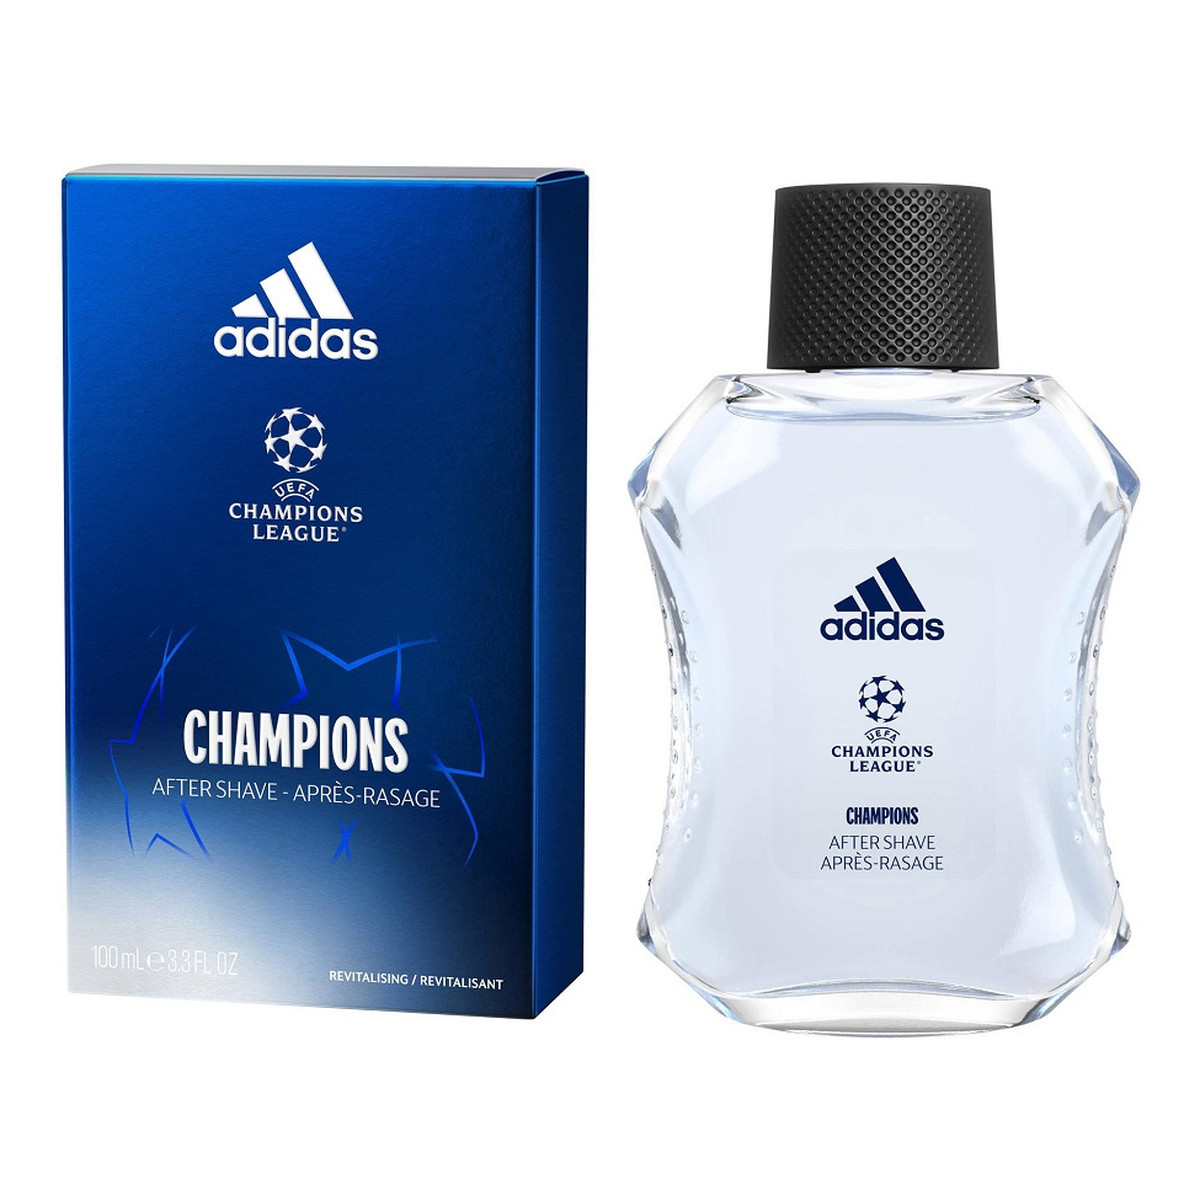 Adidas Uefa Champions League Champions Woda po goleniu 100ml